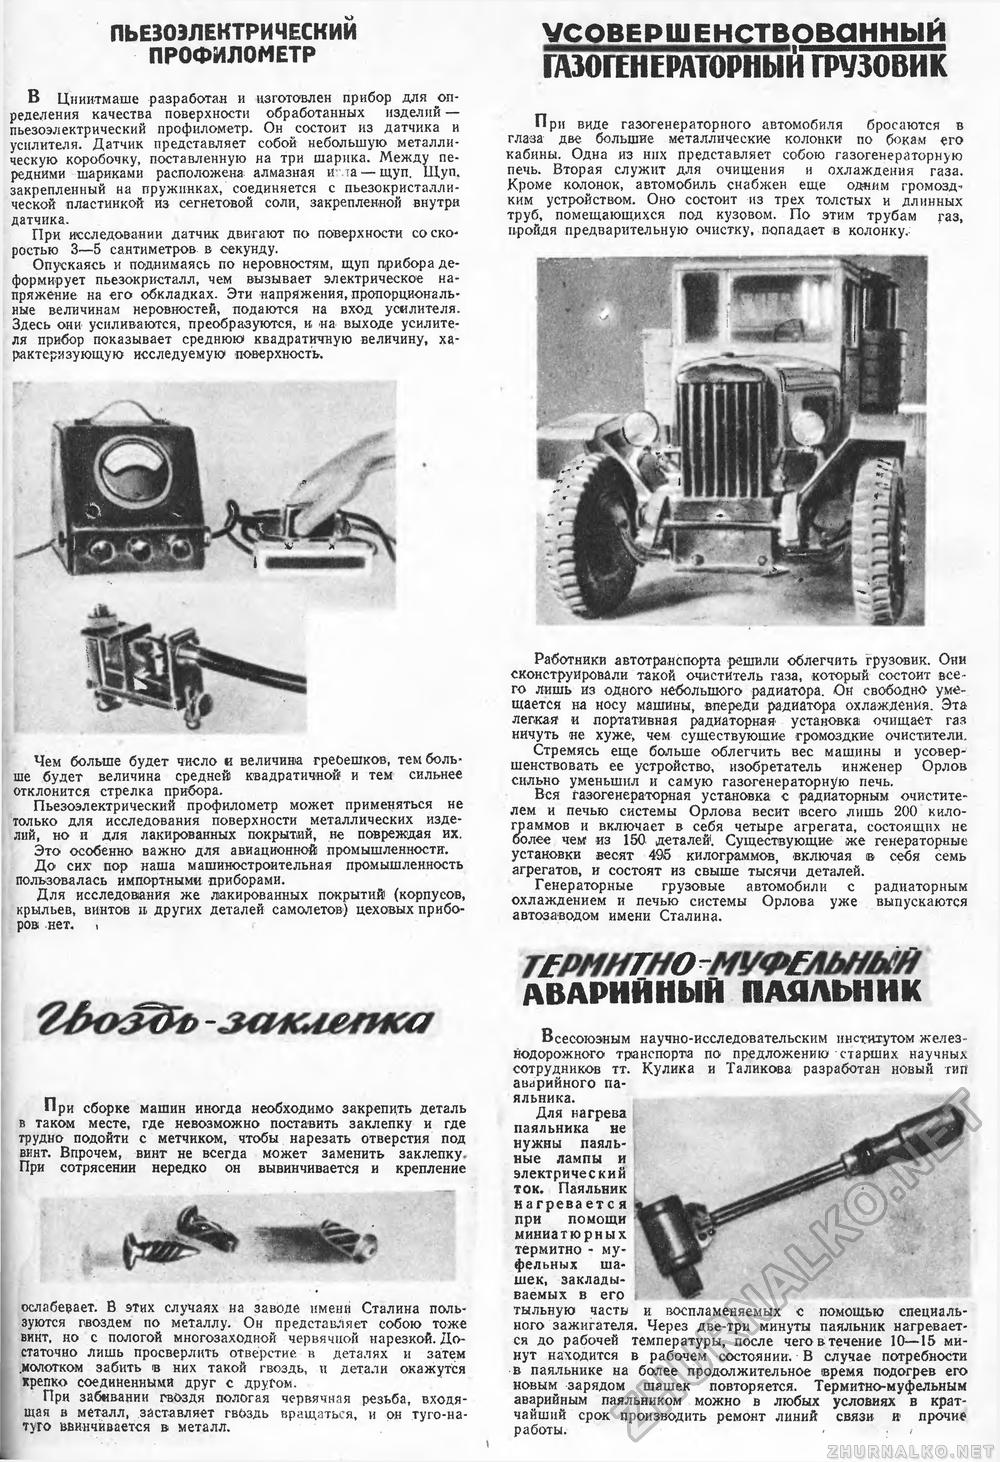 Техника - молодёжи 1945-09, страница 15